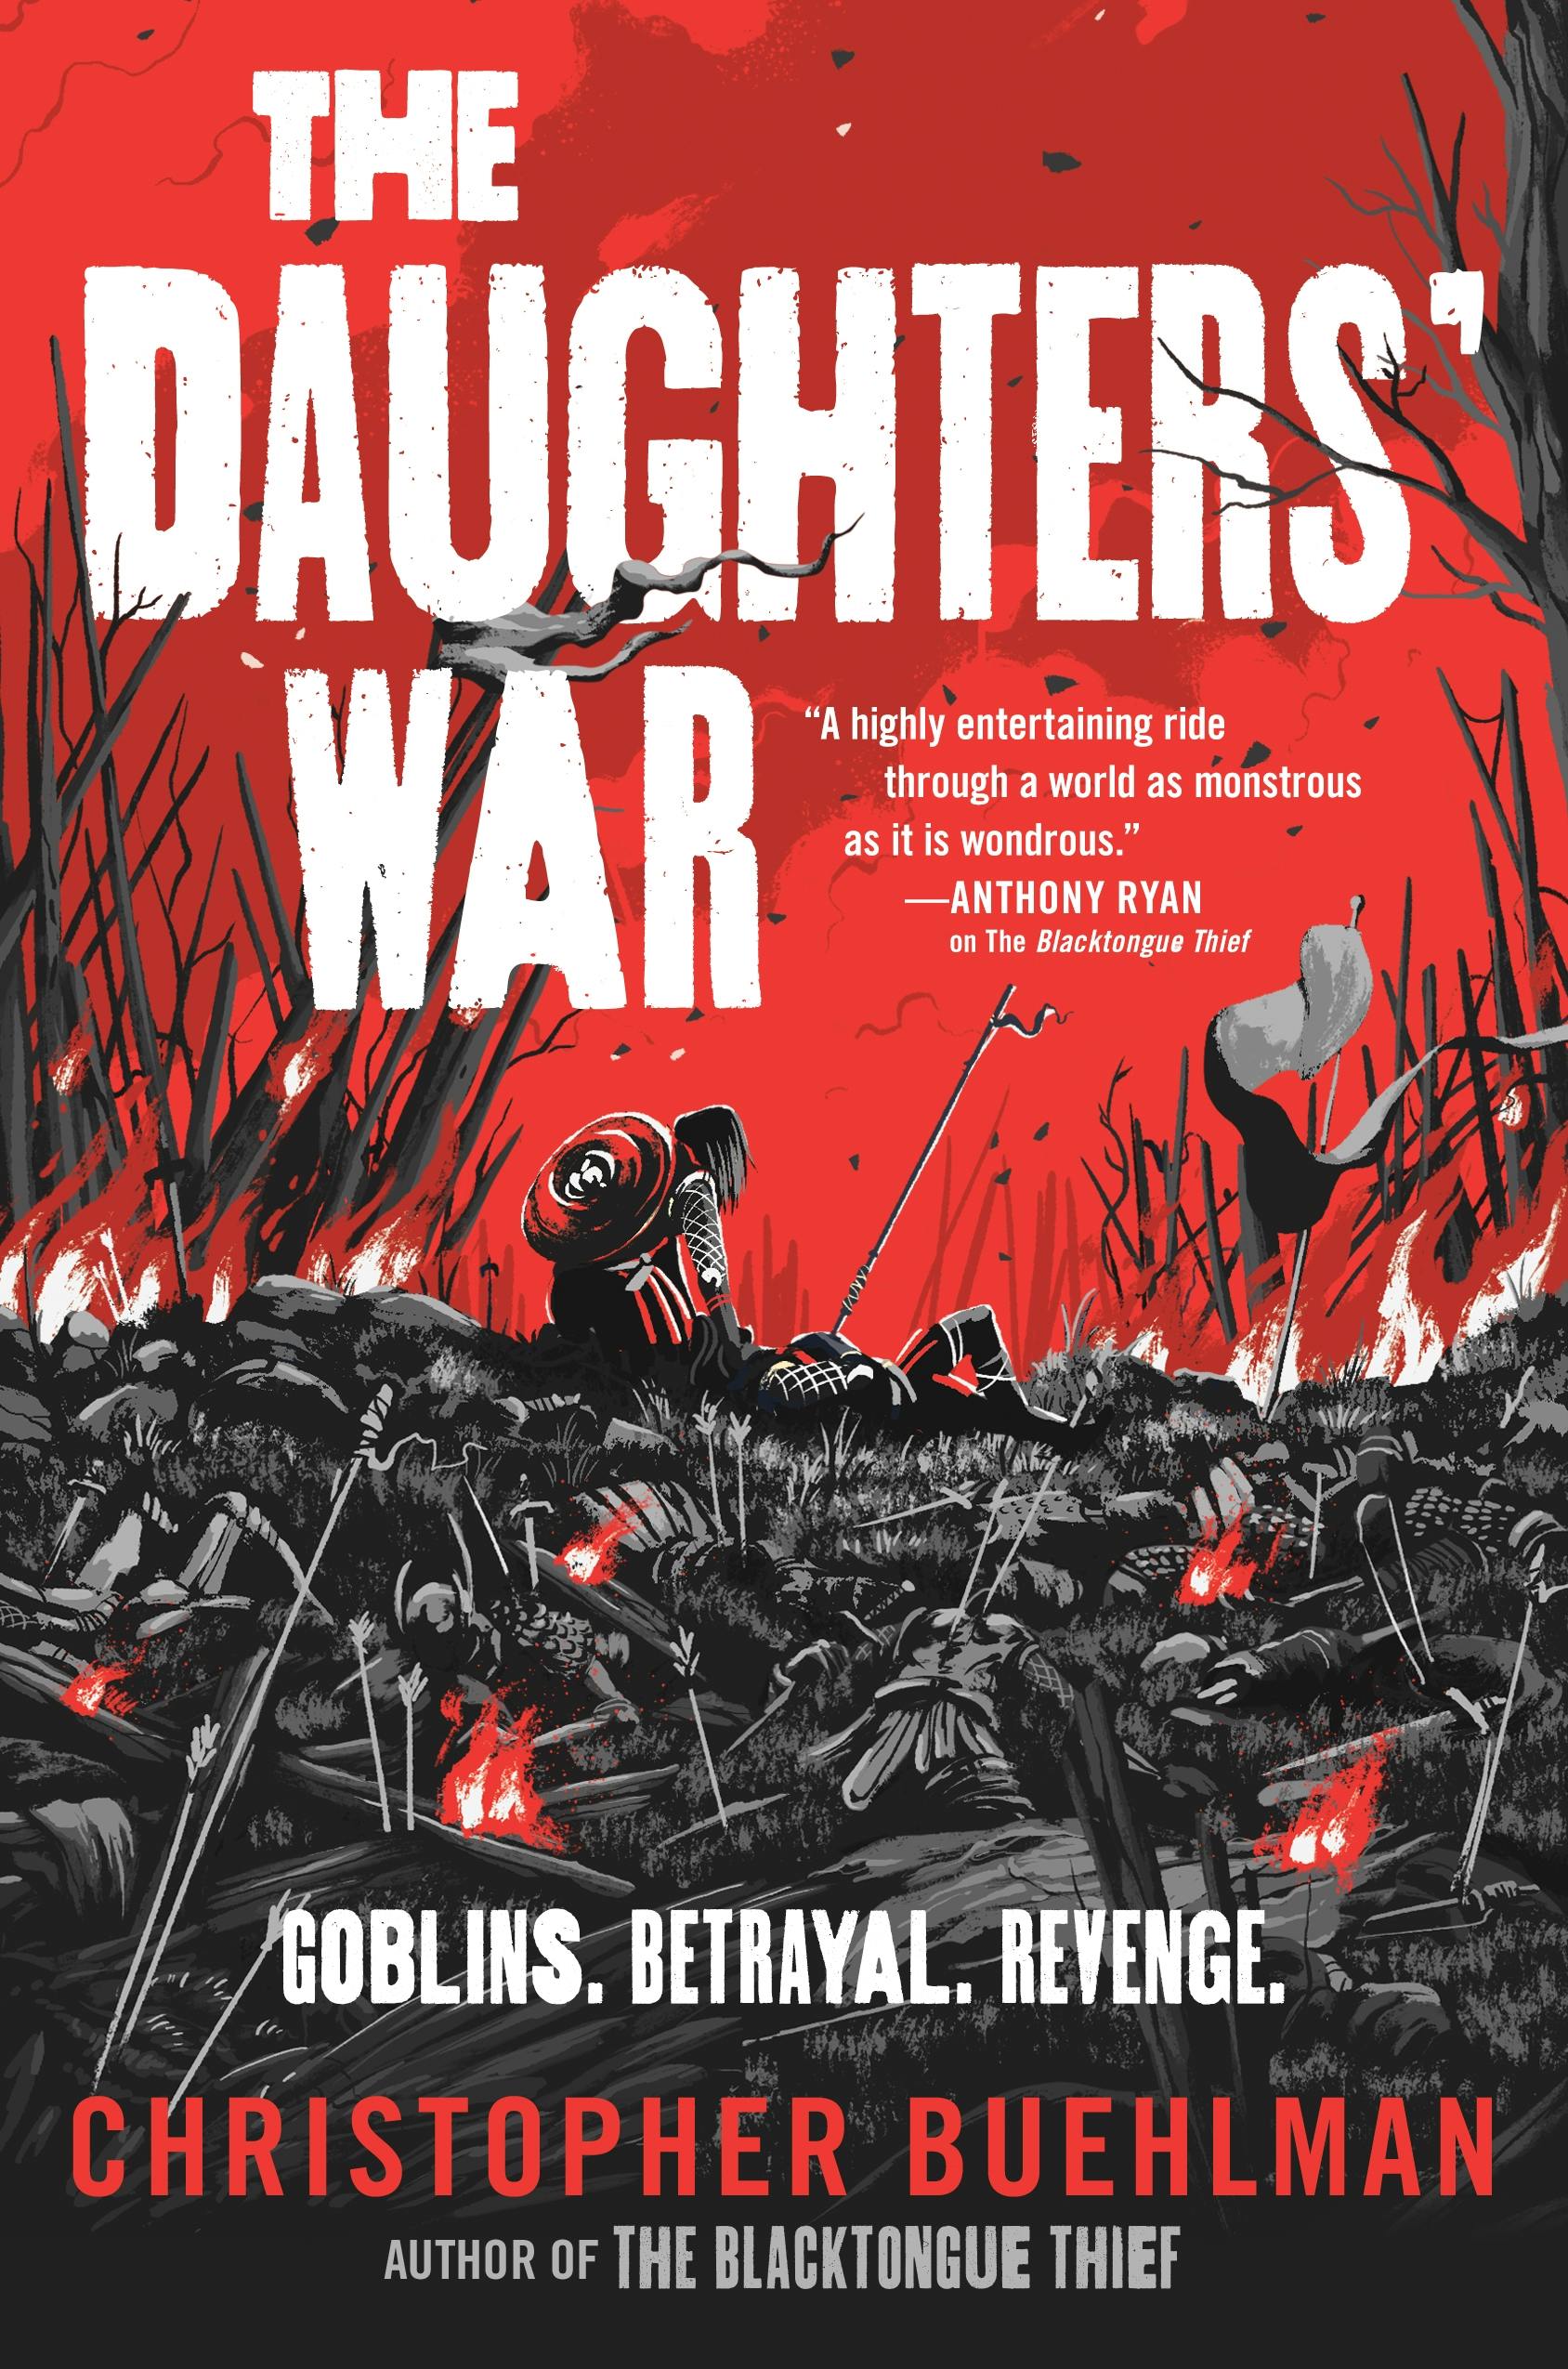 The Daughters' War